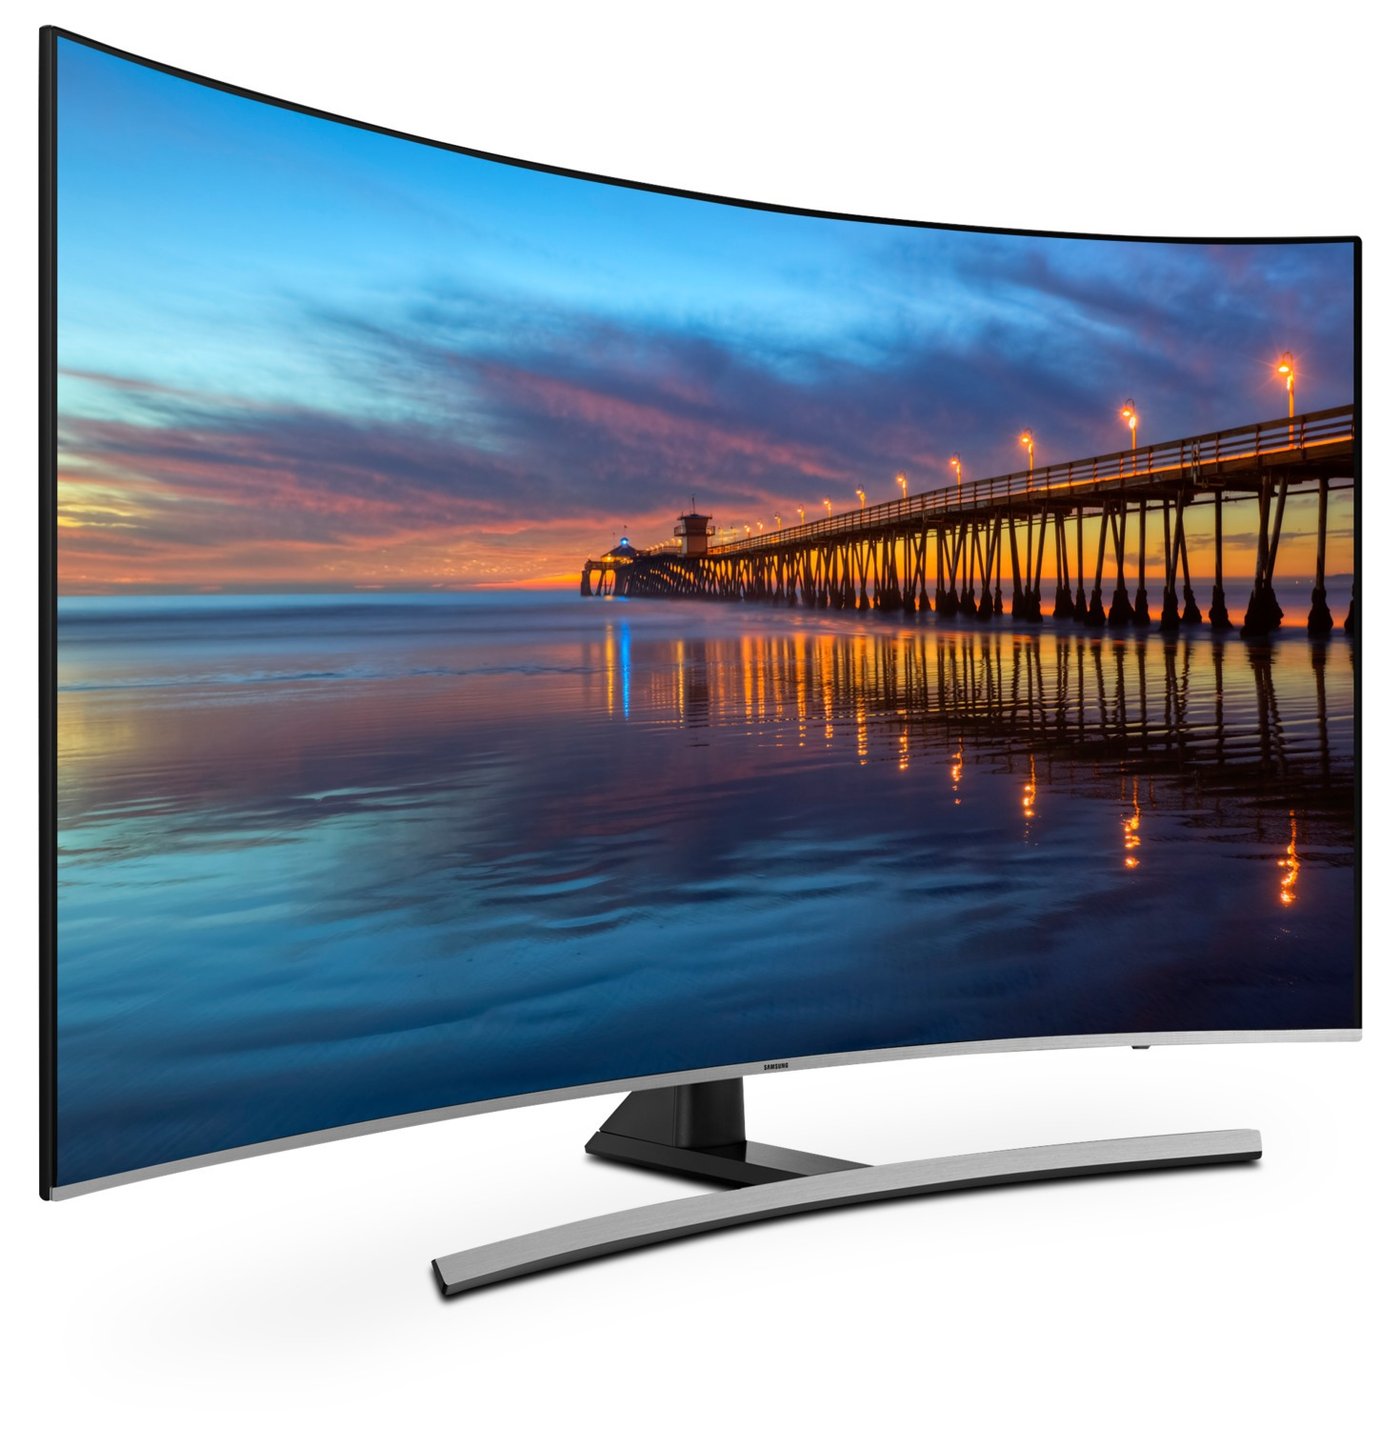 Алиса телевизор купить 65. Samsung 55ku6670. Samsung led 55. Телевизор самсунг (цена и функции). ТВ самсунг 138.